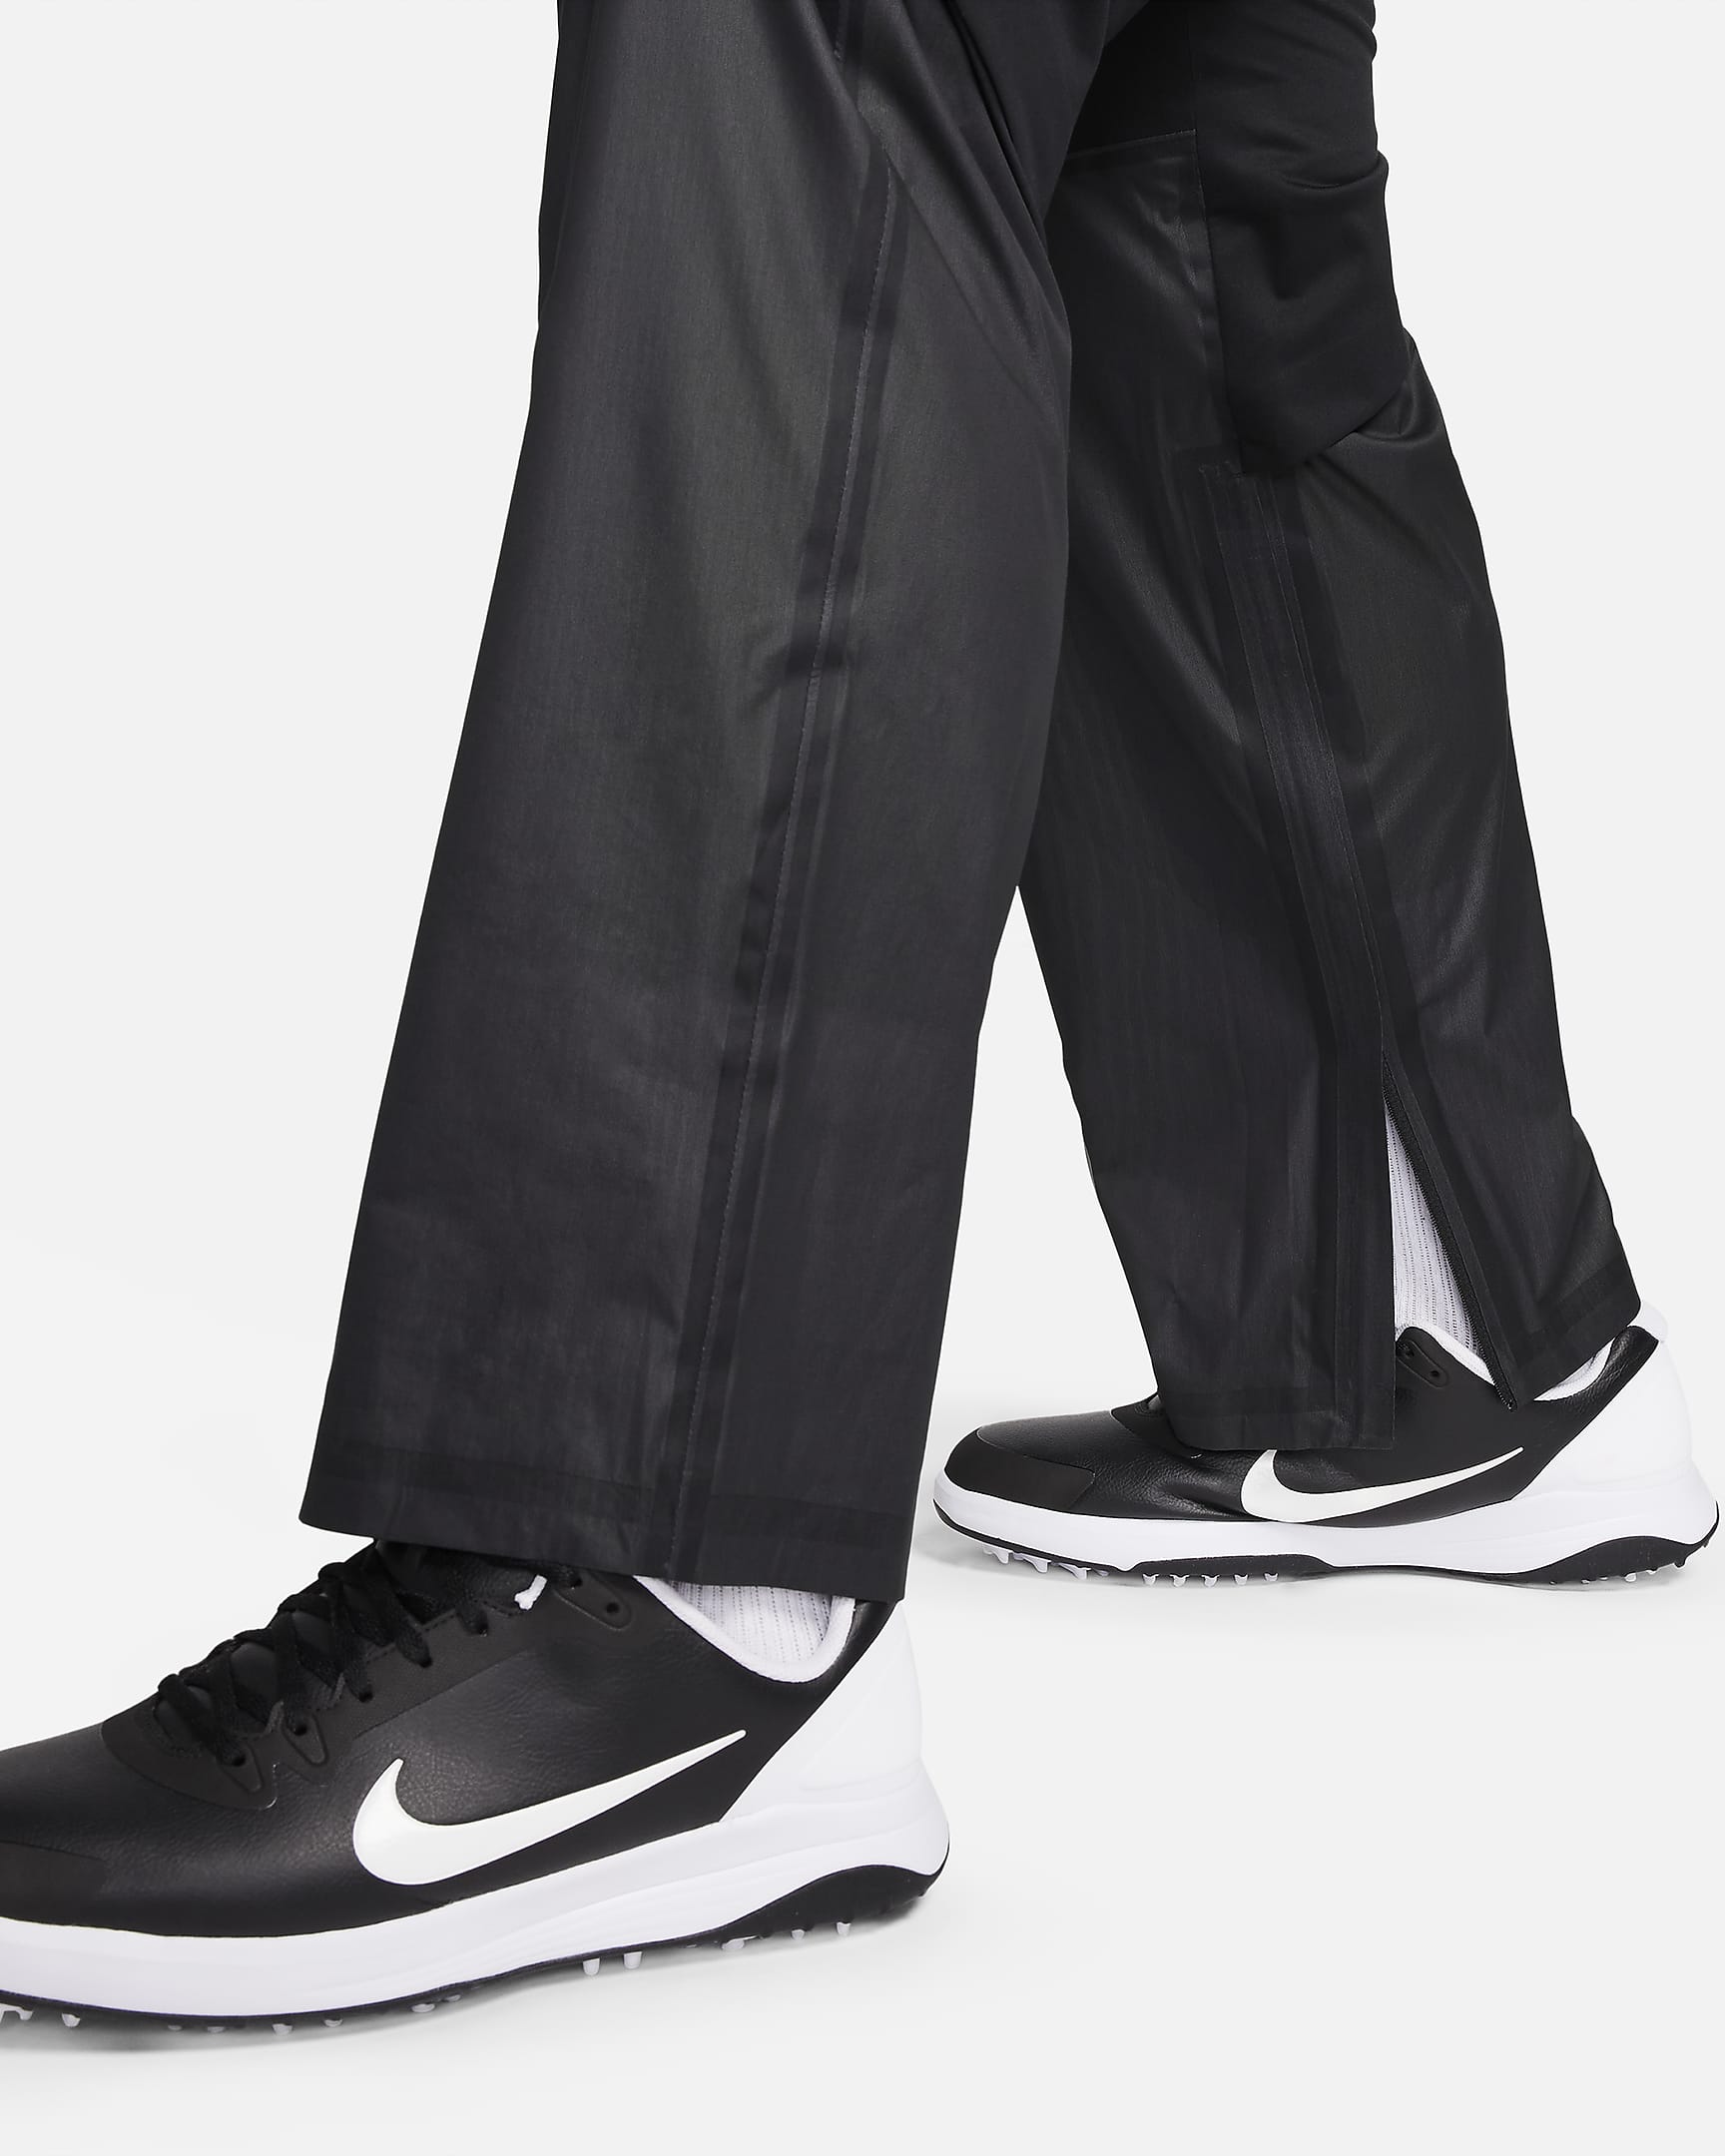 Pantalones de Golf para hombre Nike Storm-FIT ADV - Negro/Blanco